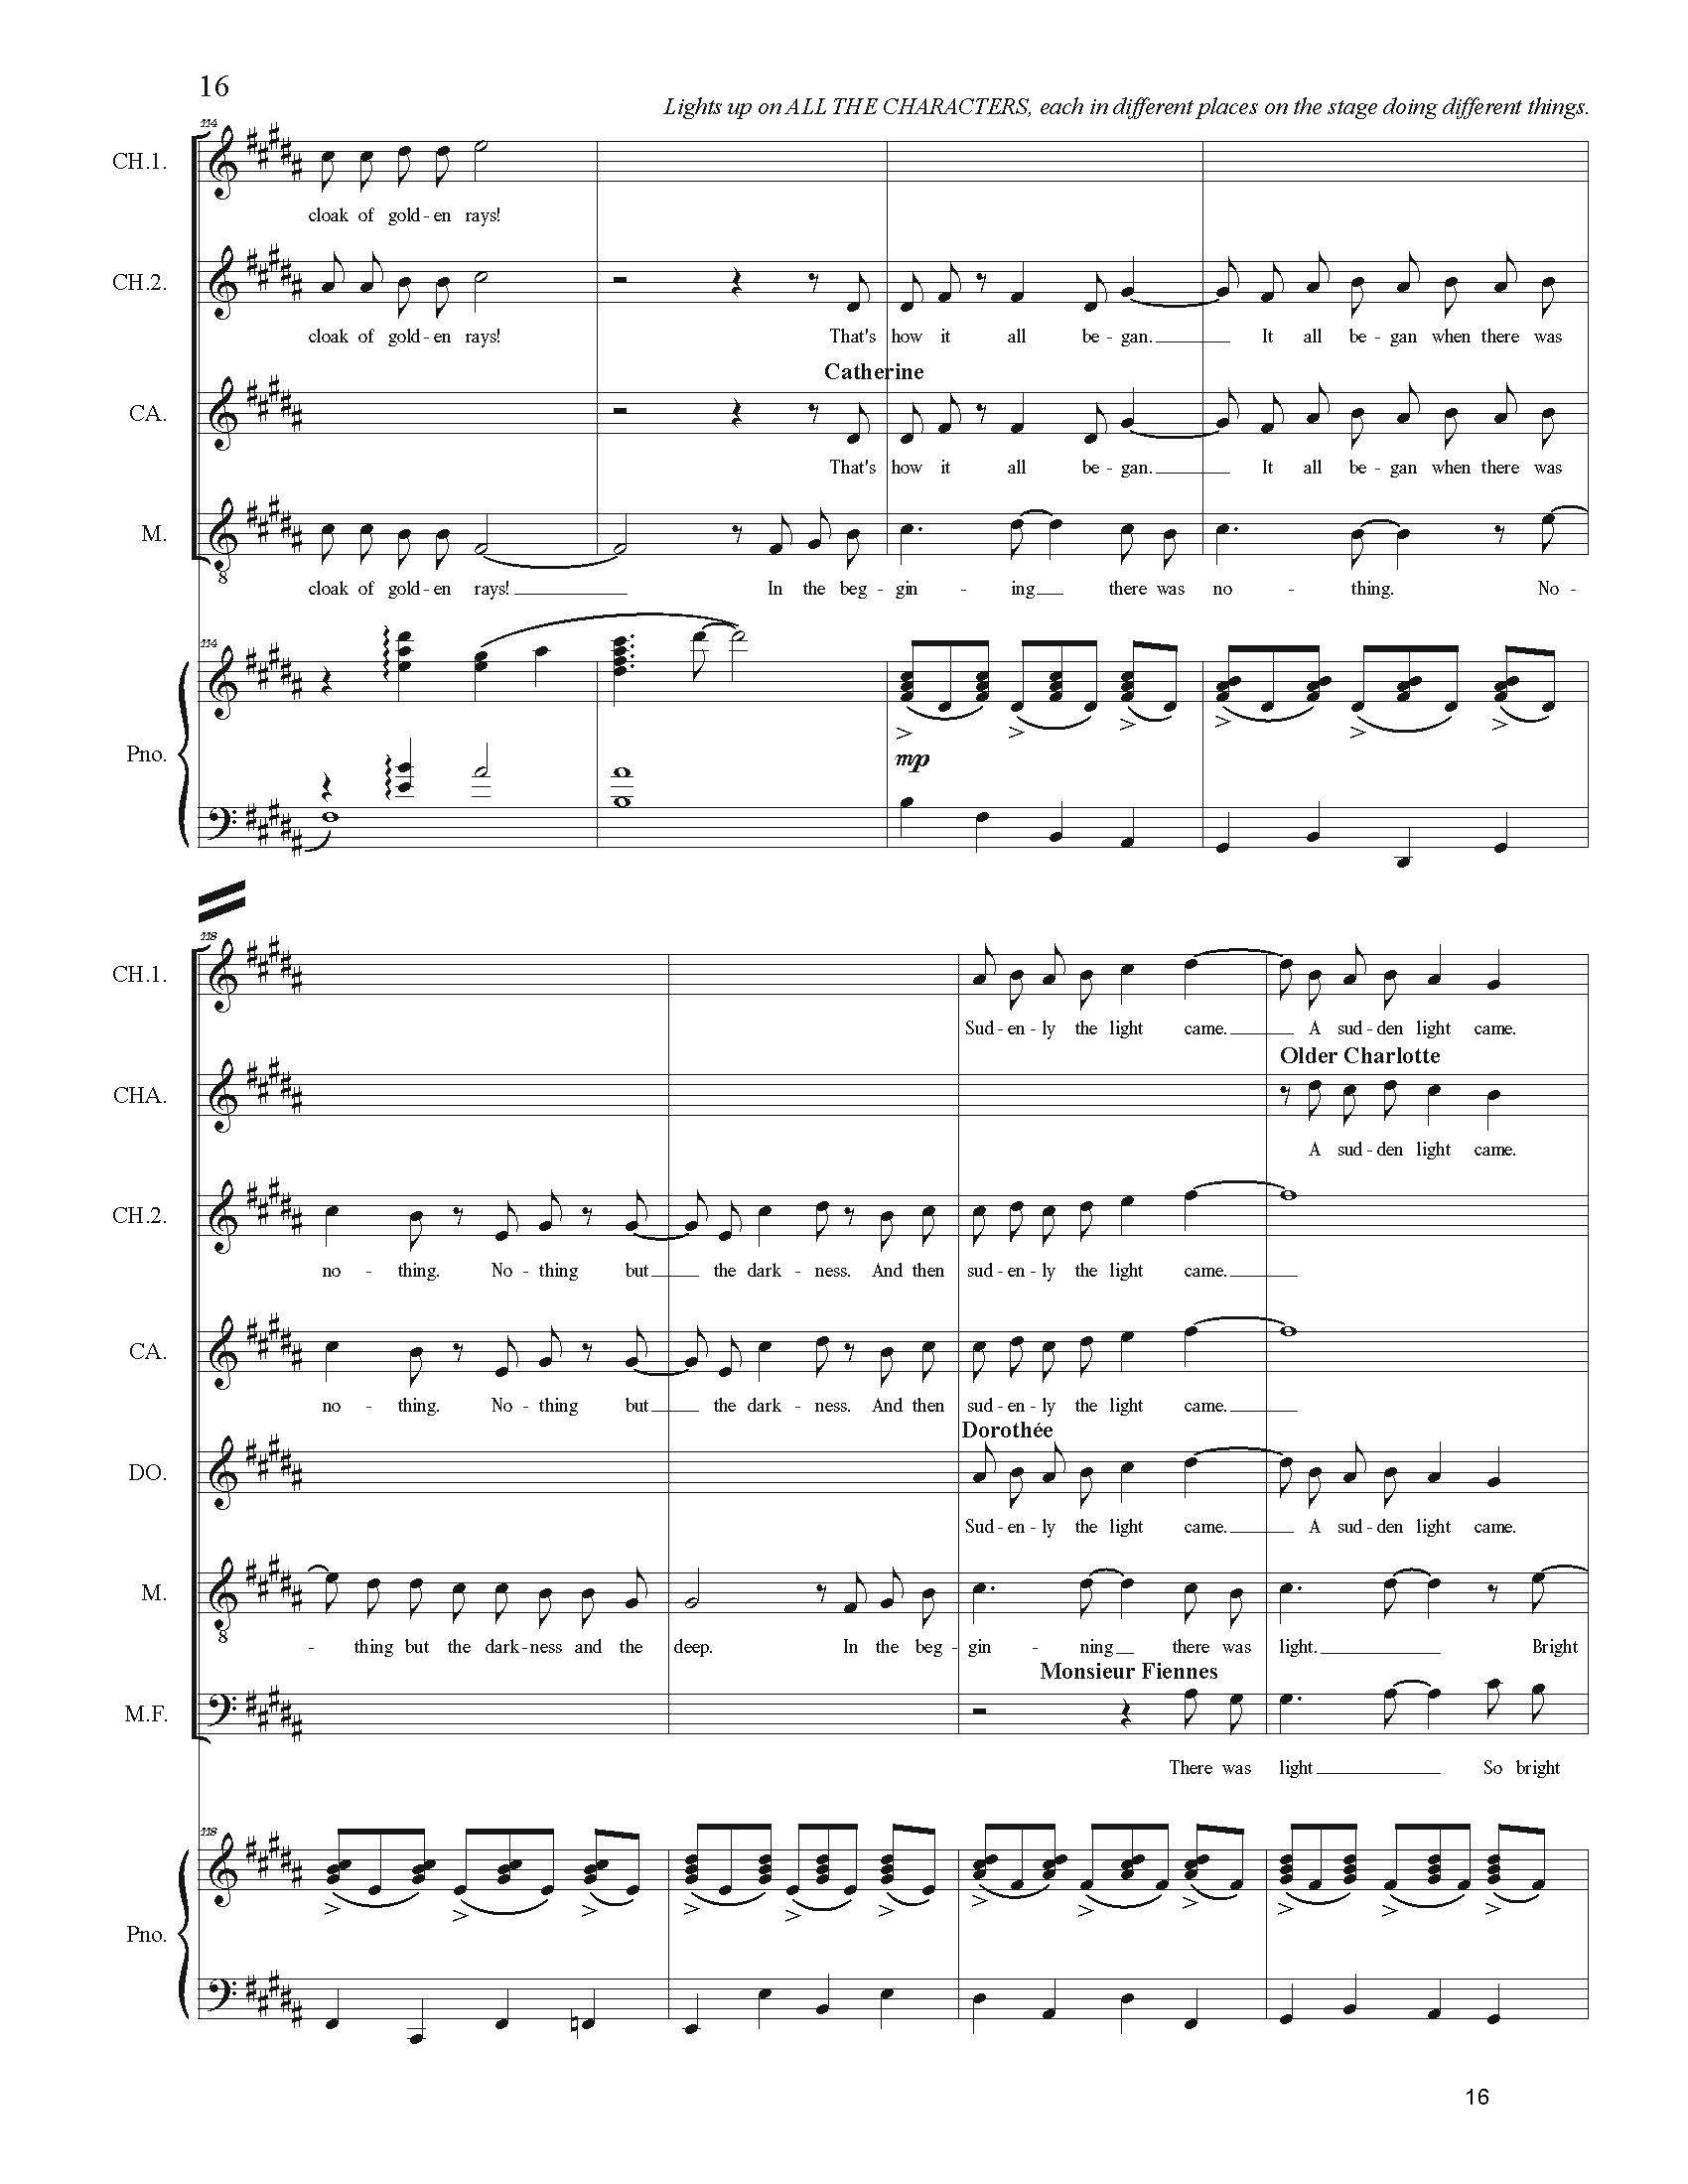 FULL PIANO VOCAL SCORE DRAFT 1 - Score_Page_016.jpg